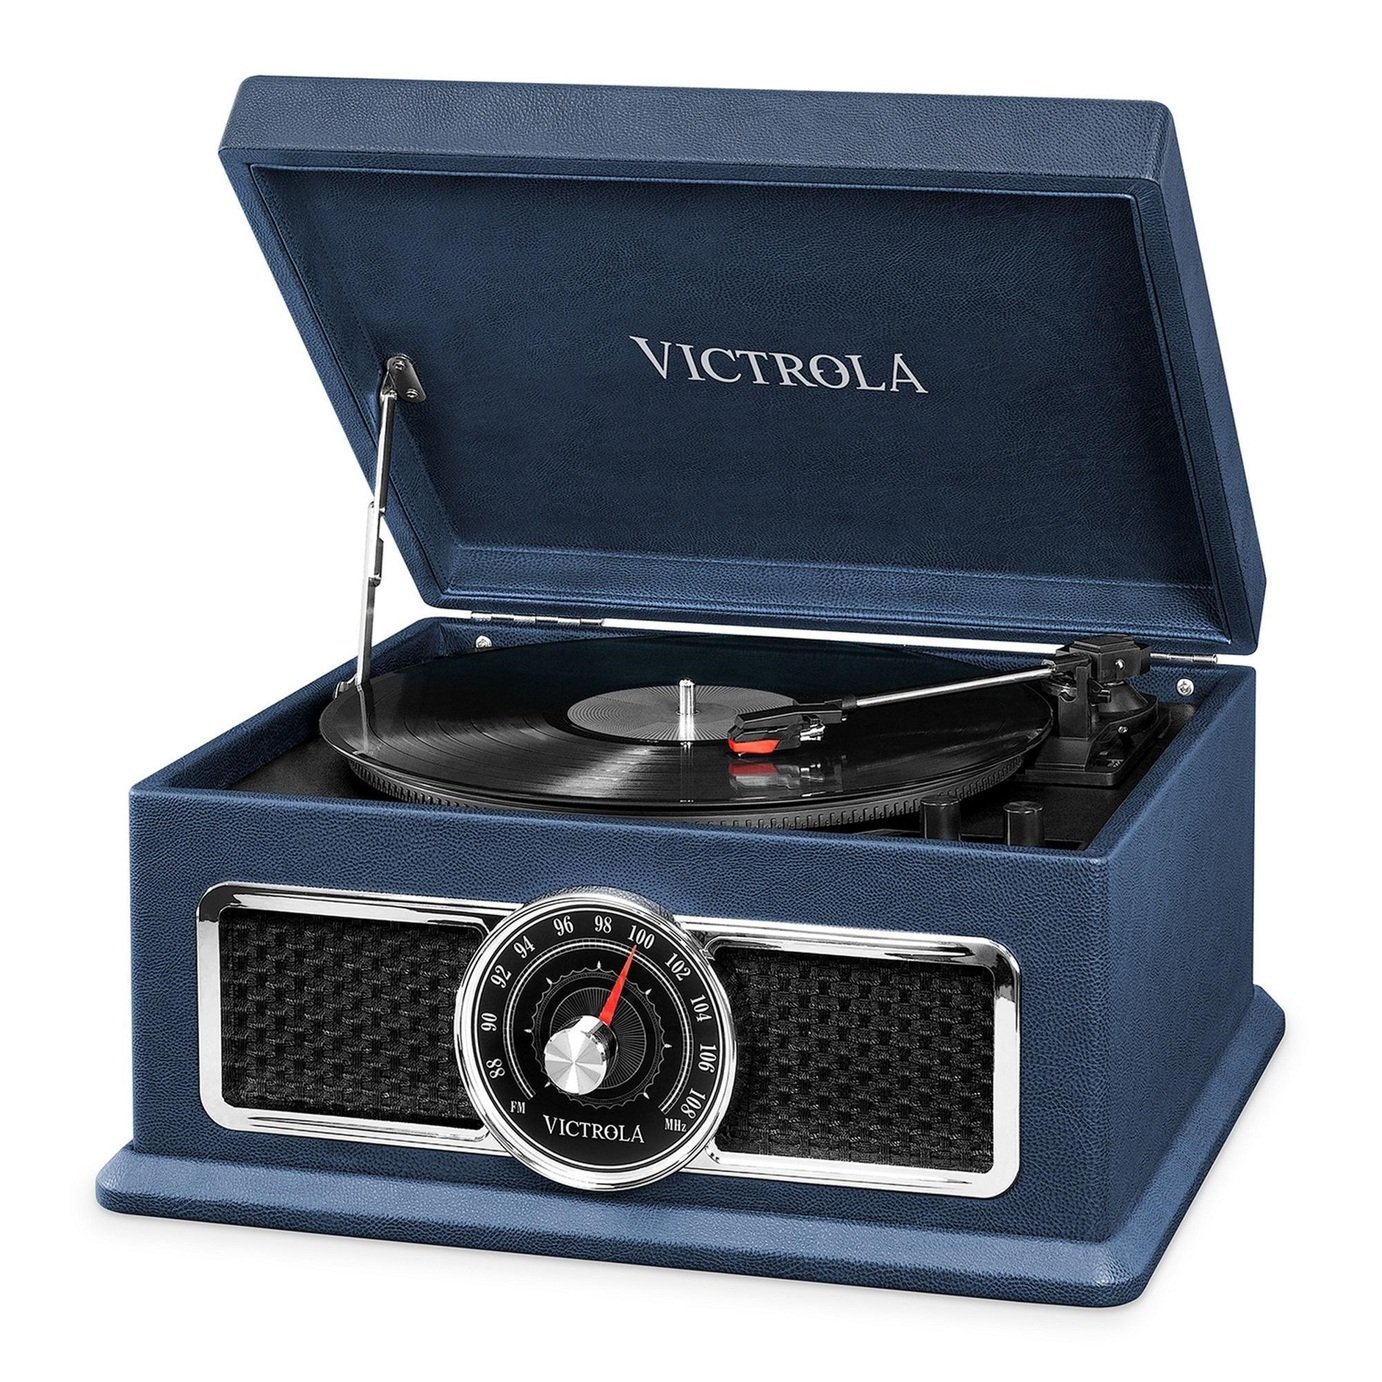 Victrola VTA-810 Music Centre Review